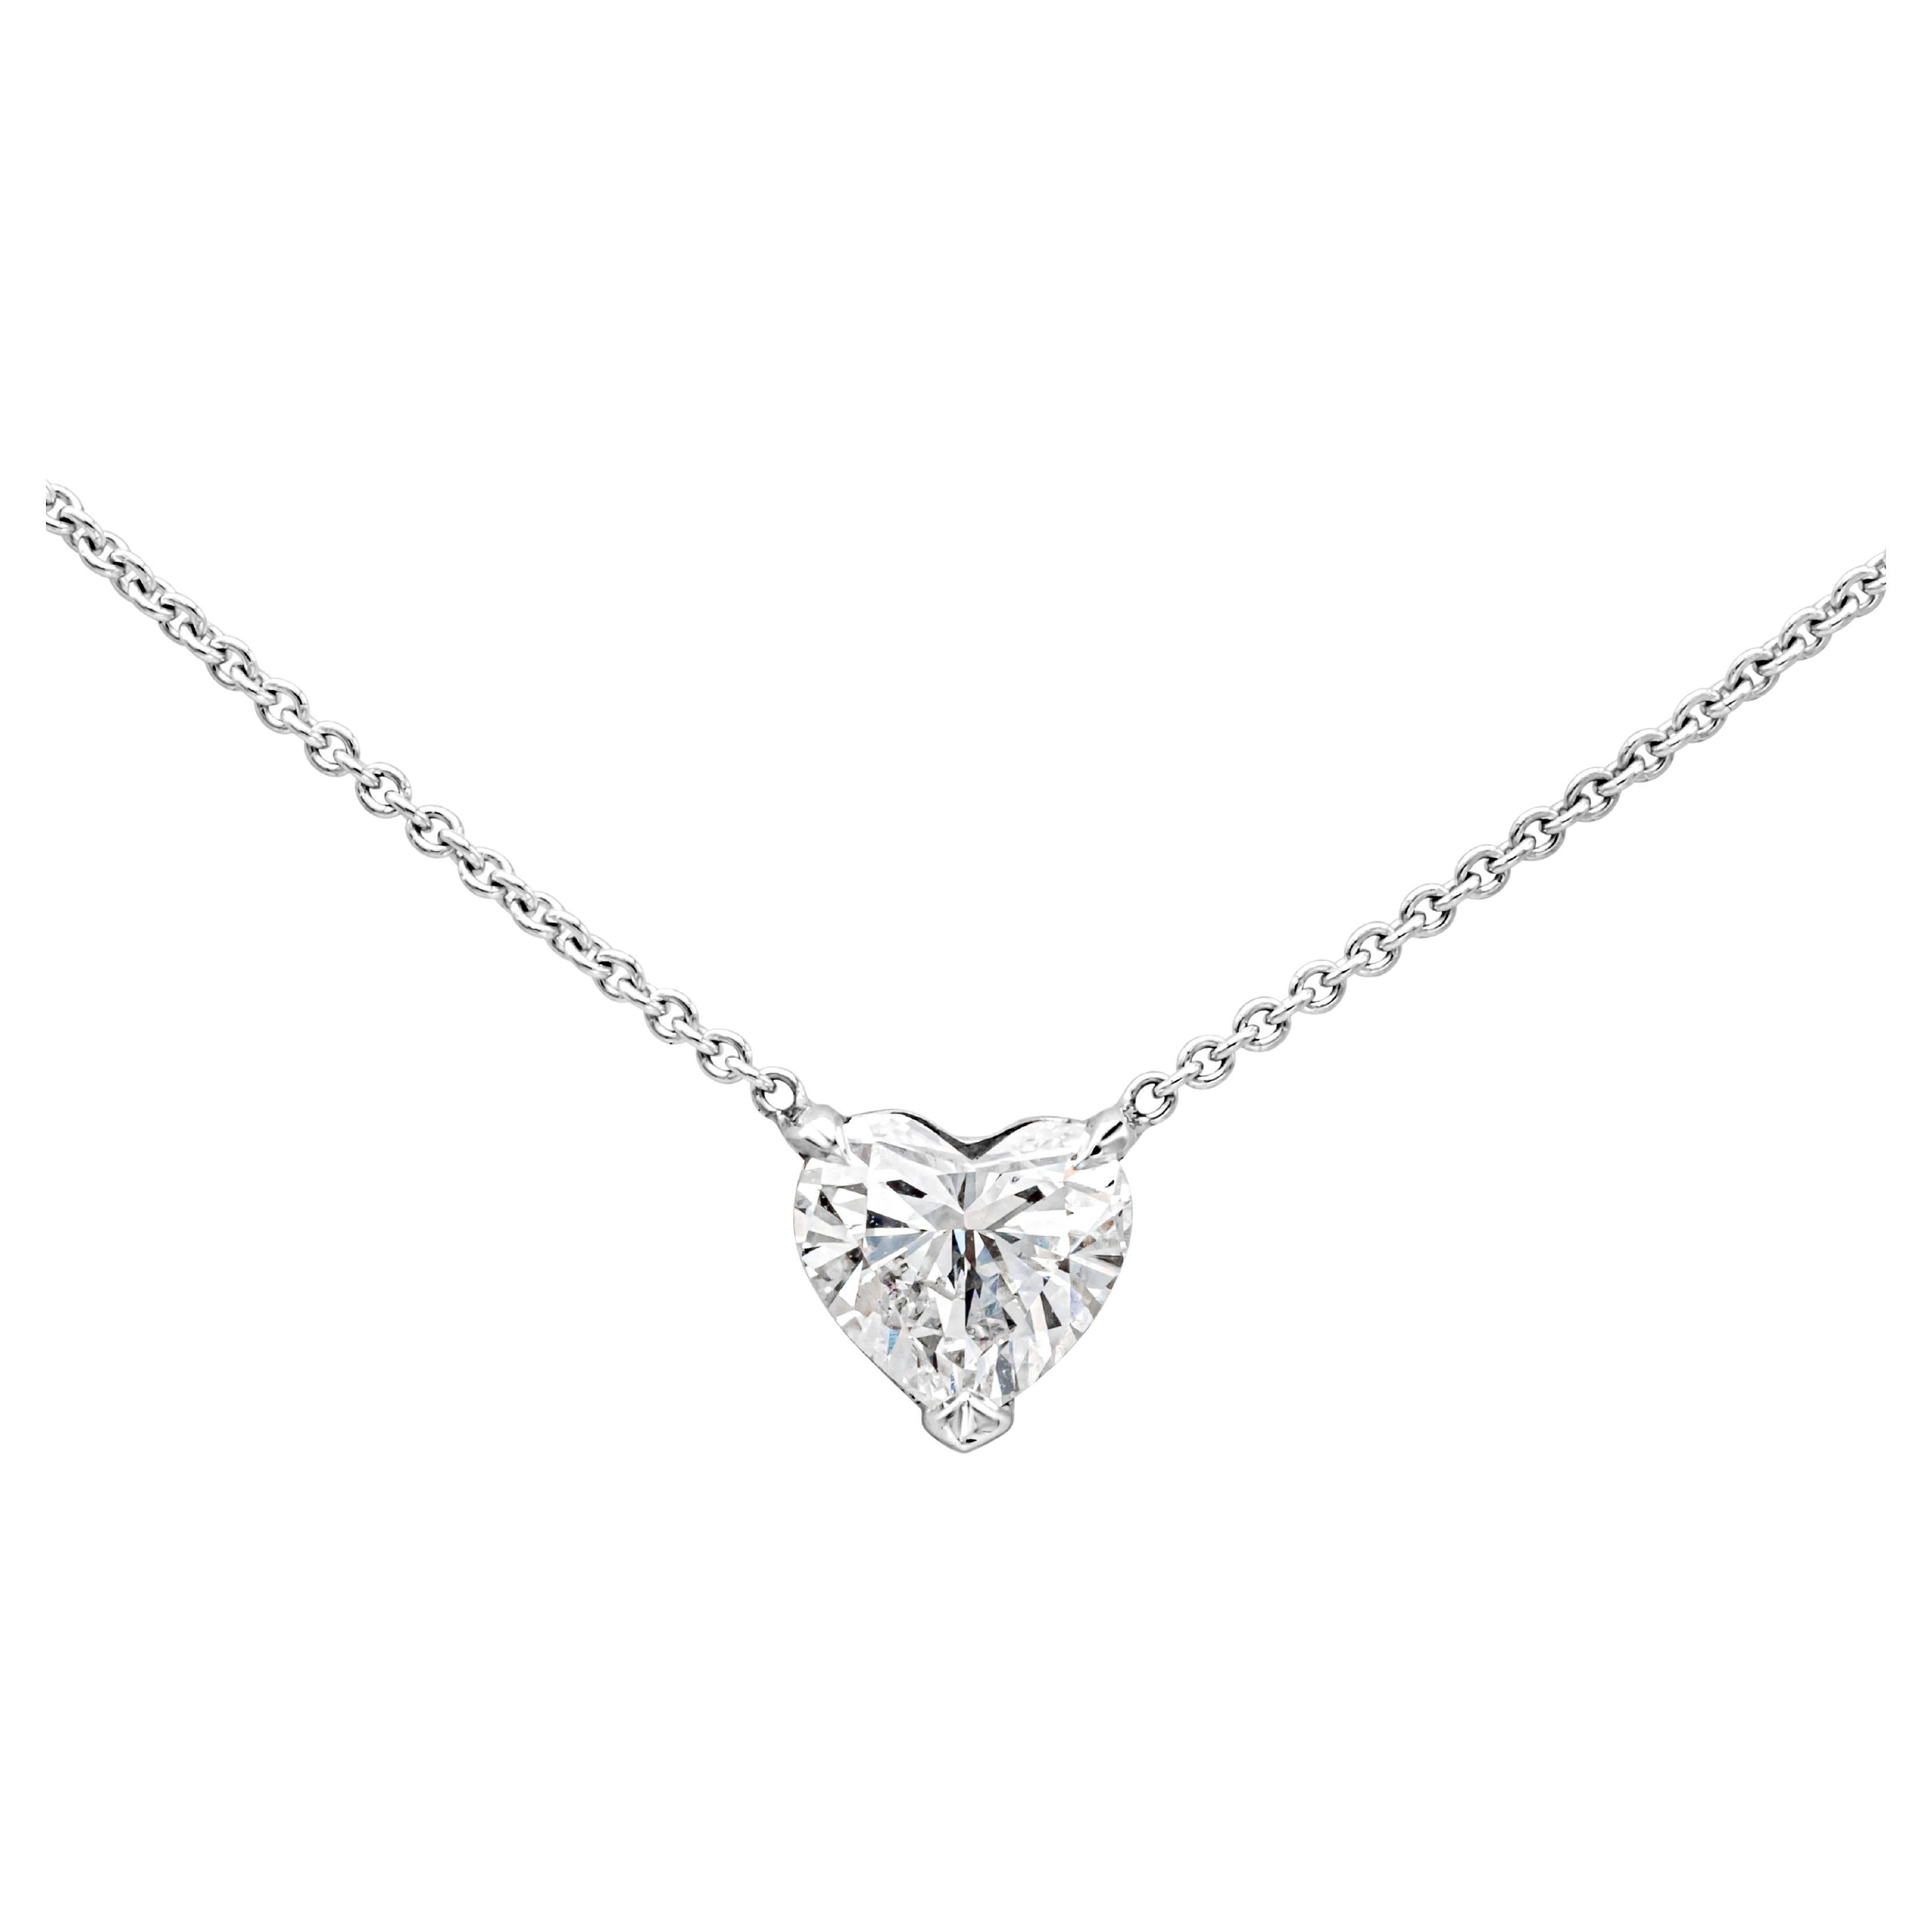 Roman Malakov 1.05 Carats Heart Shape Diamond Solitaire Pendant Necklace